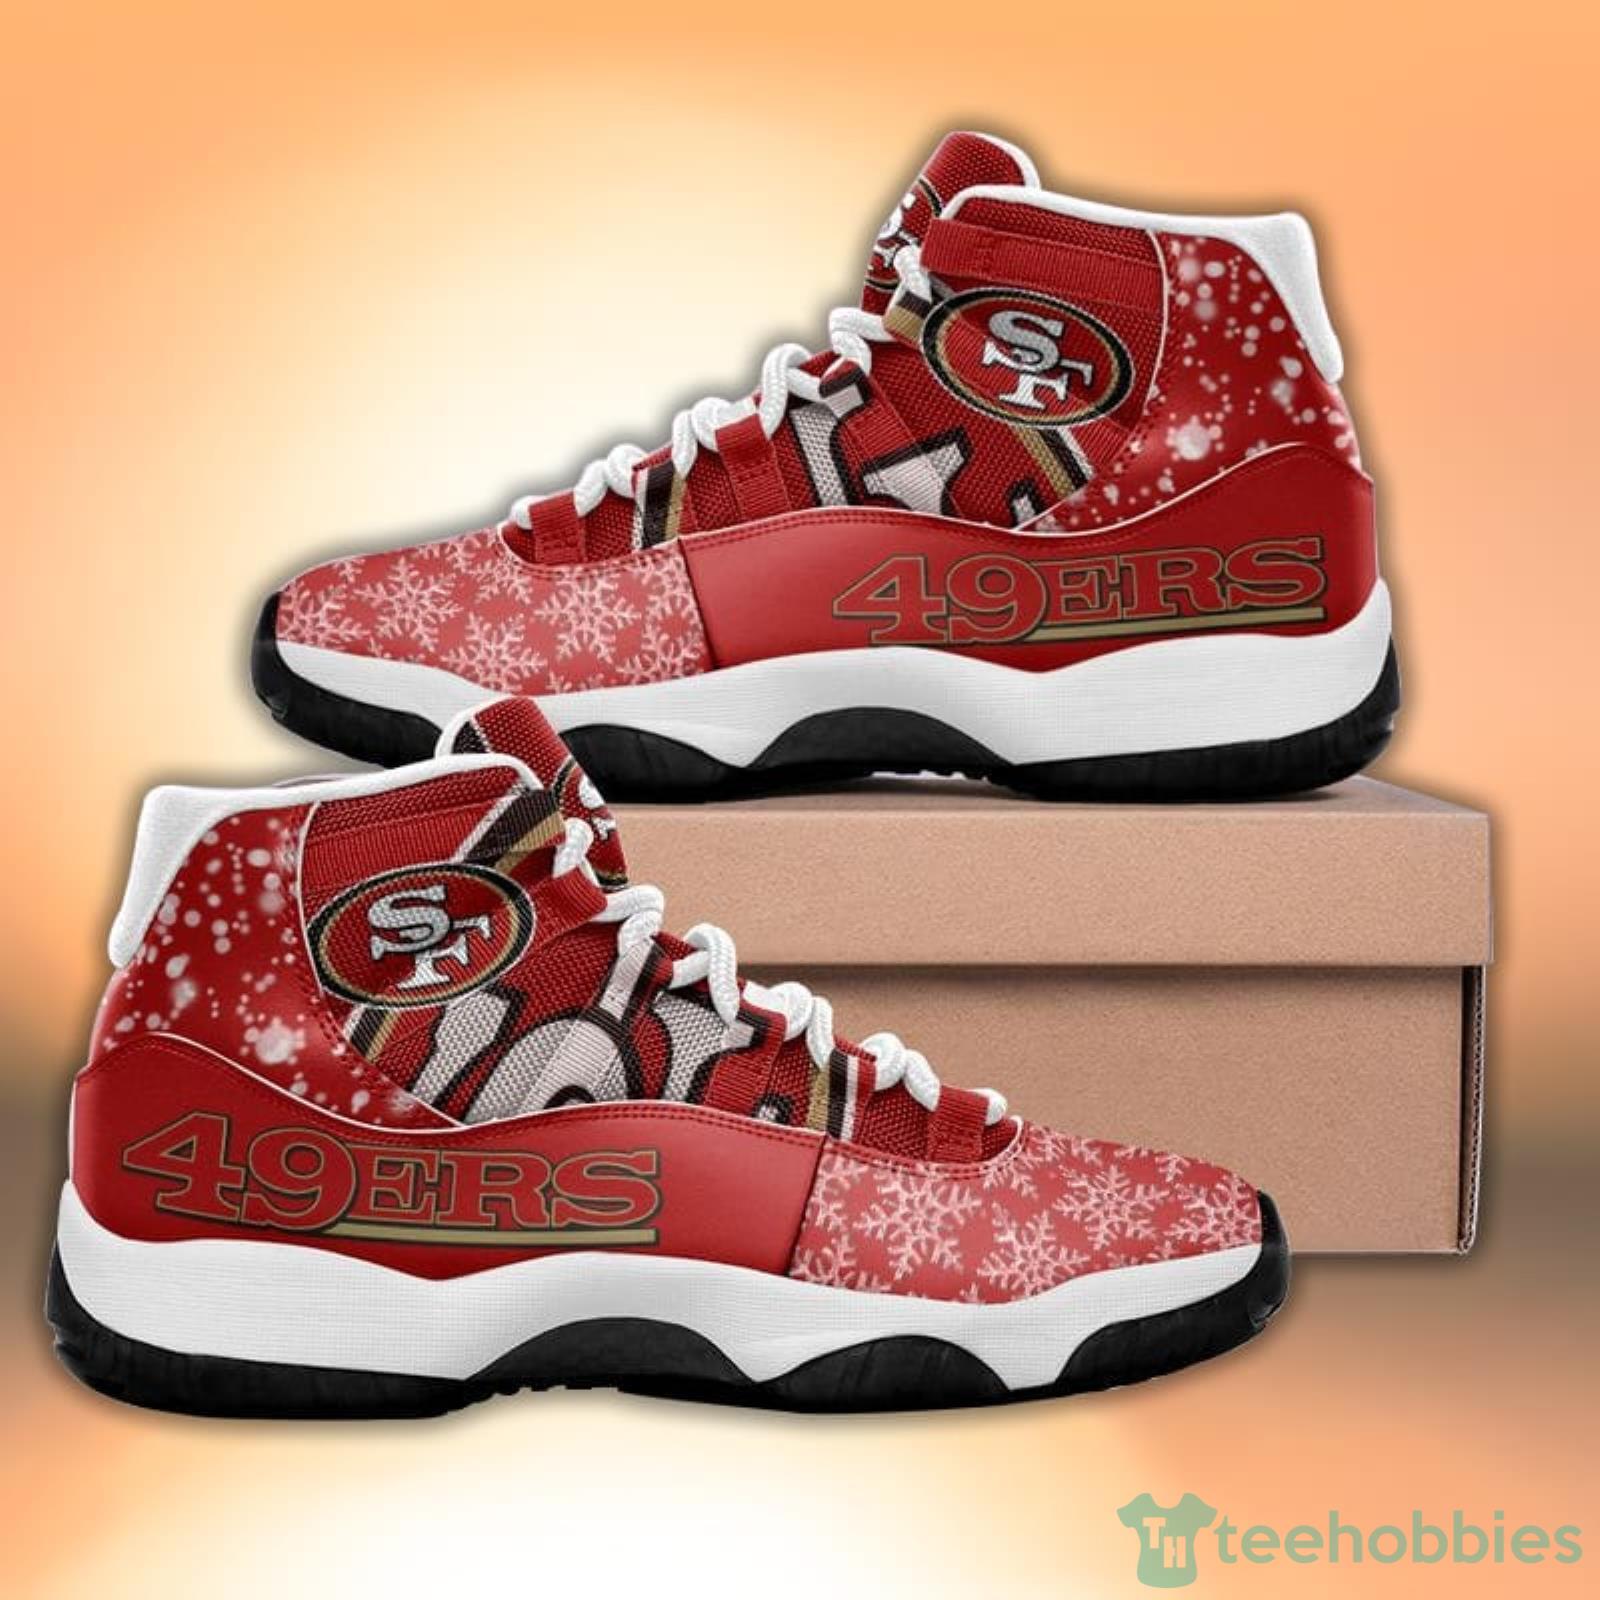 Chicago Bears NFL Personalized Air Jordan 11 Shoes Sneaker - Growkoc